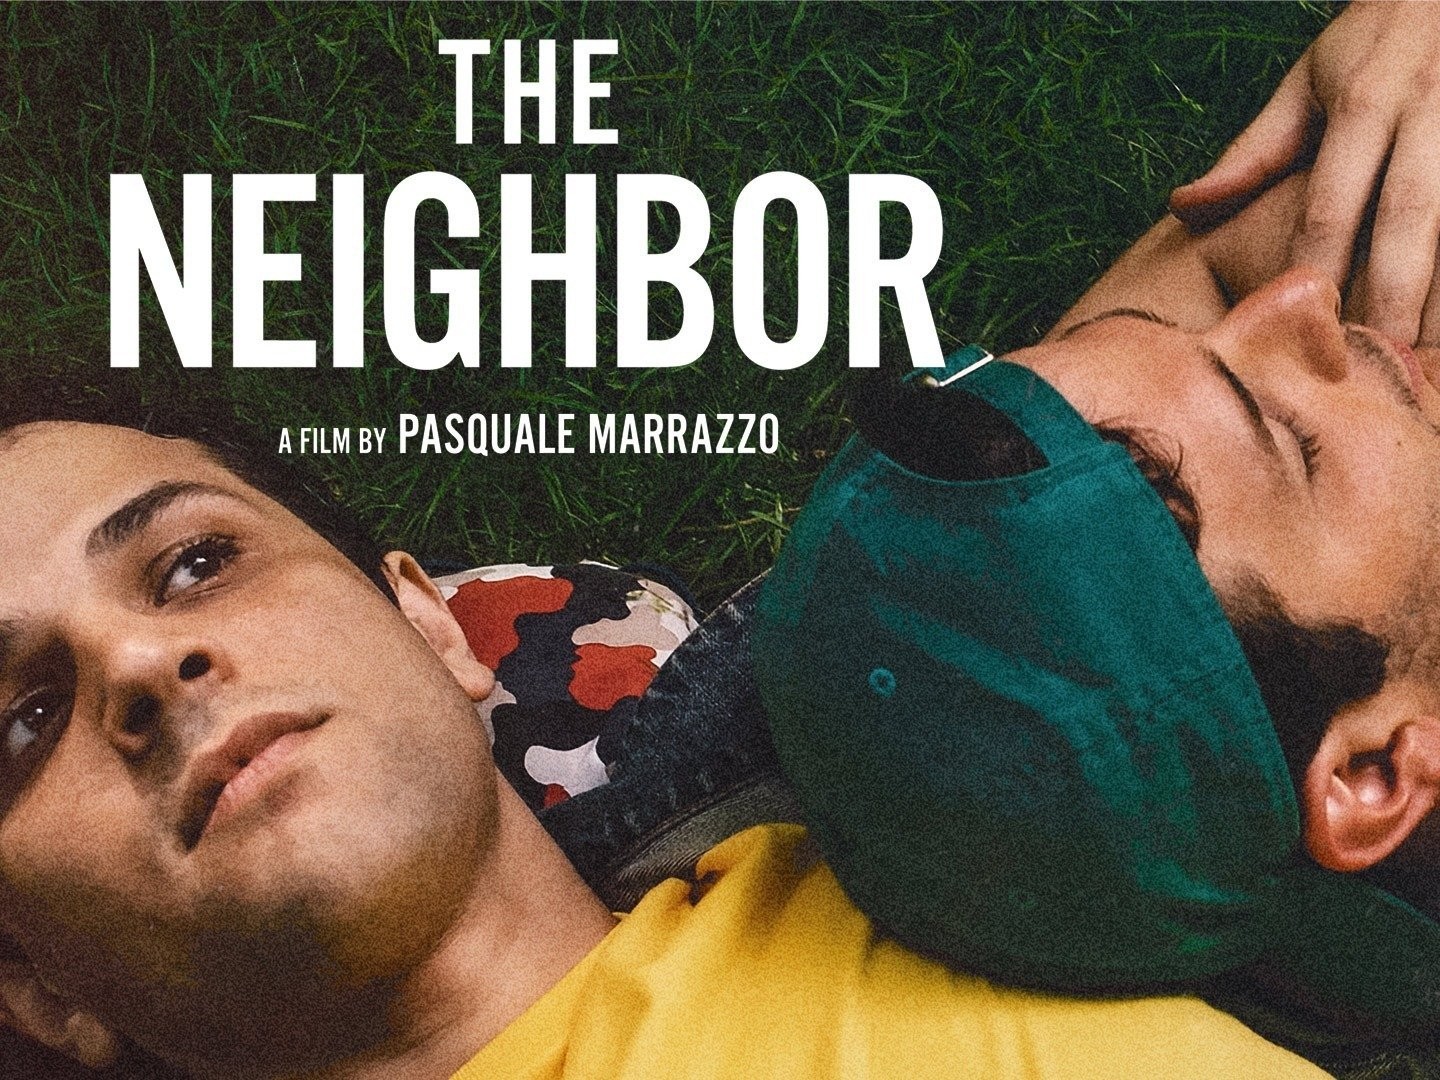 The Neighbors - Rotten Tomatoes